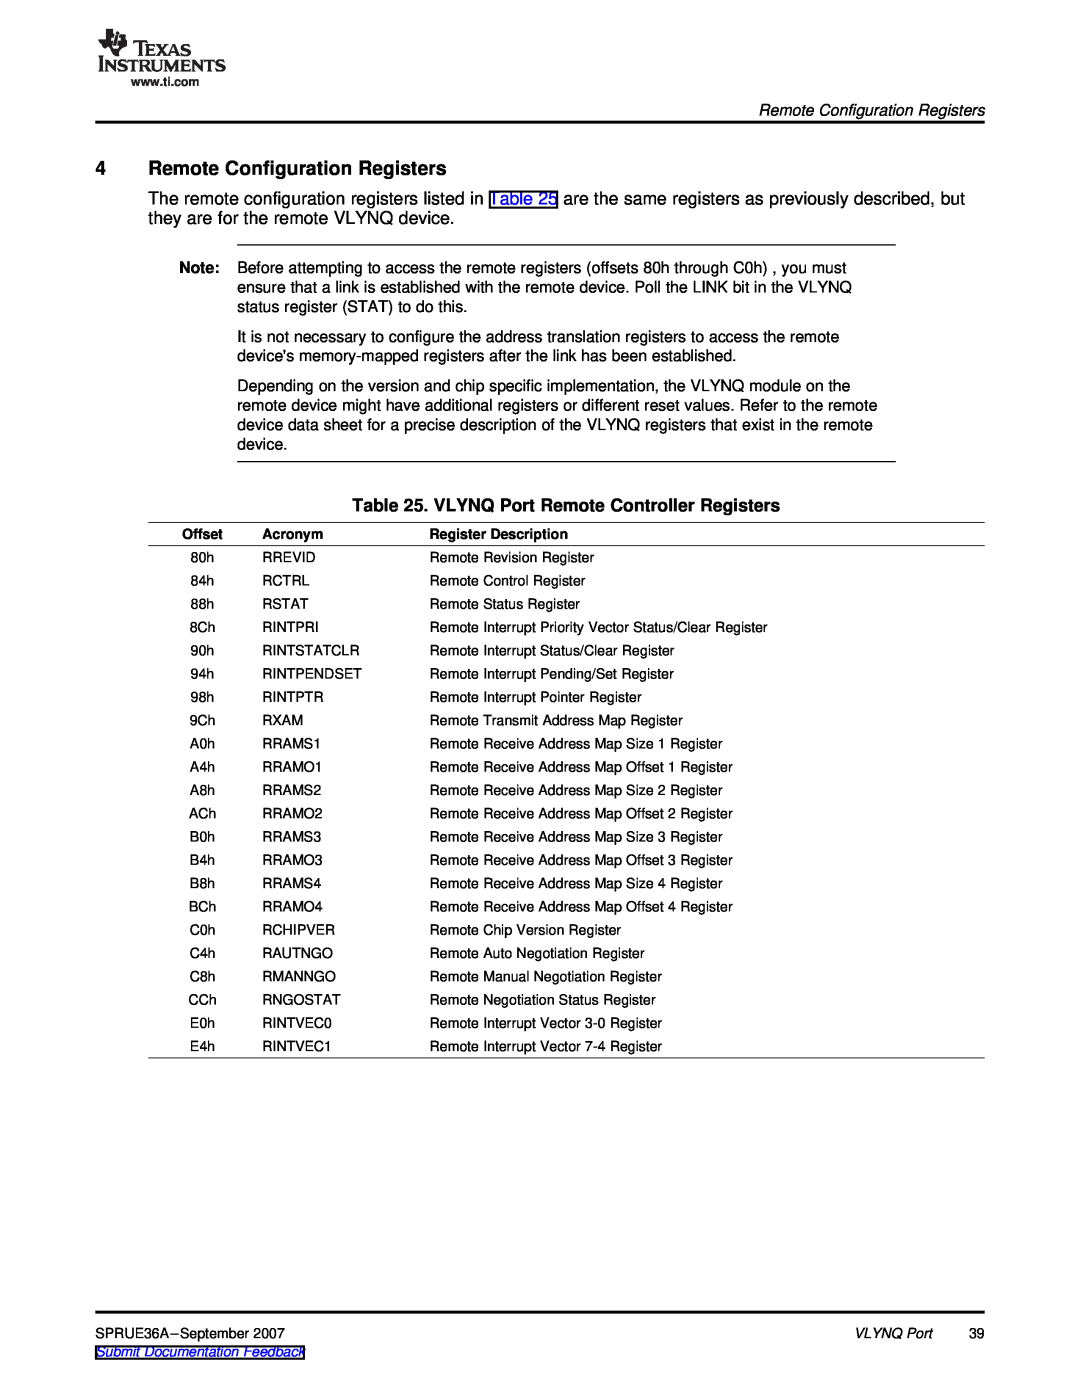 Texas Instruments manual Remote Configuration Registers, VLYNQ Port Remote Controller Registers 